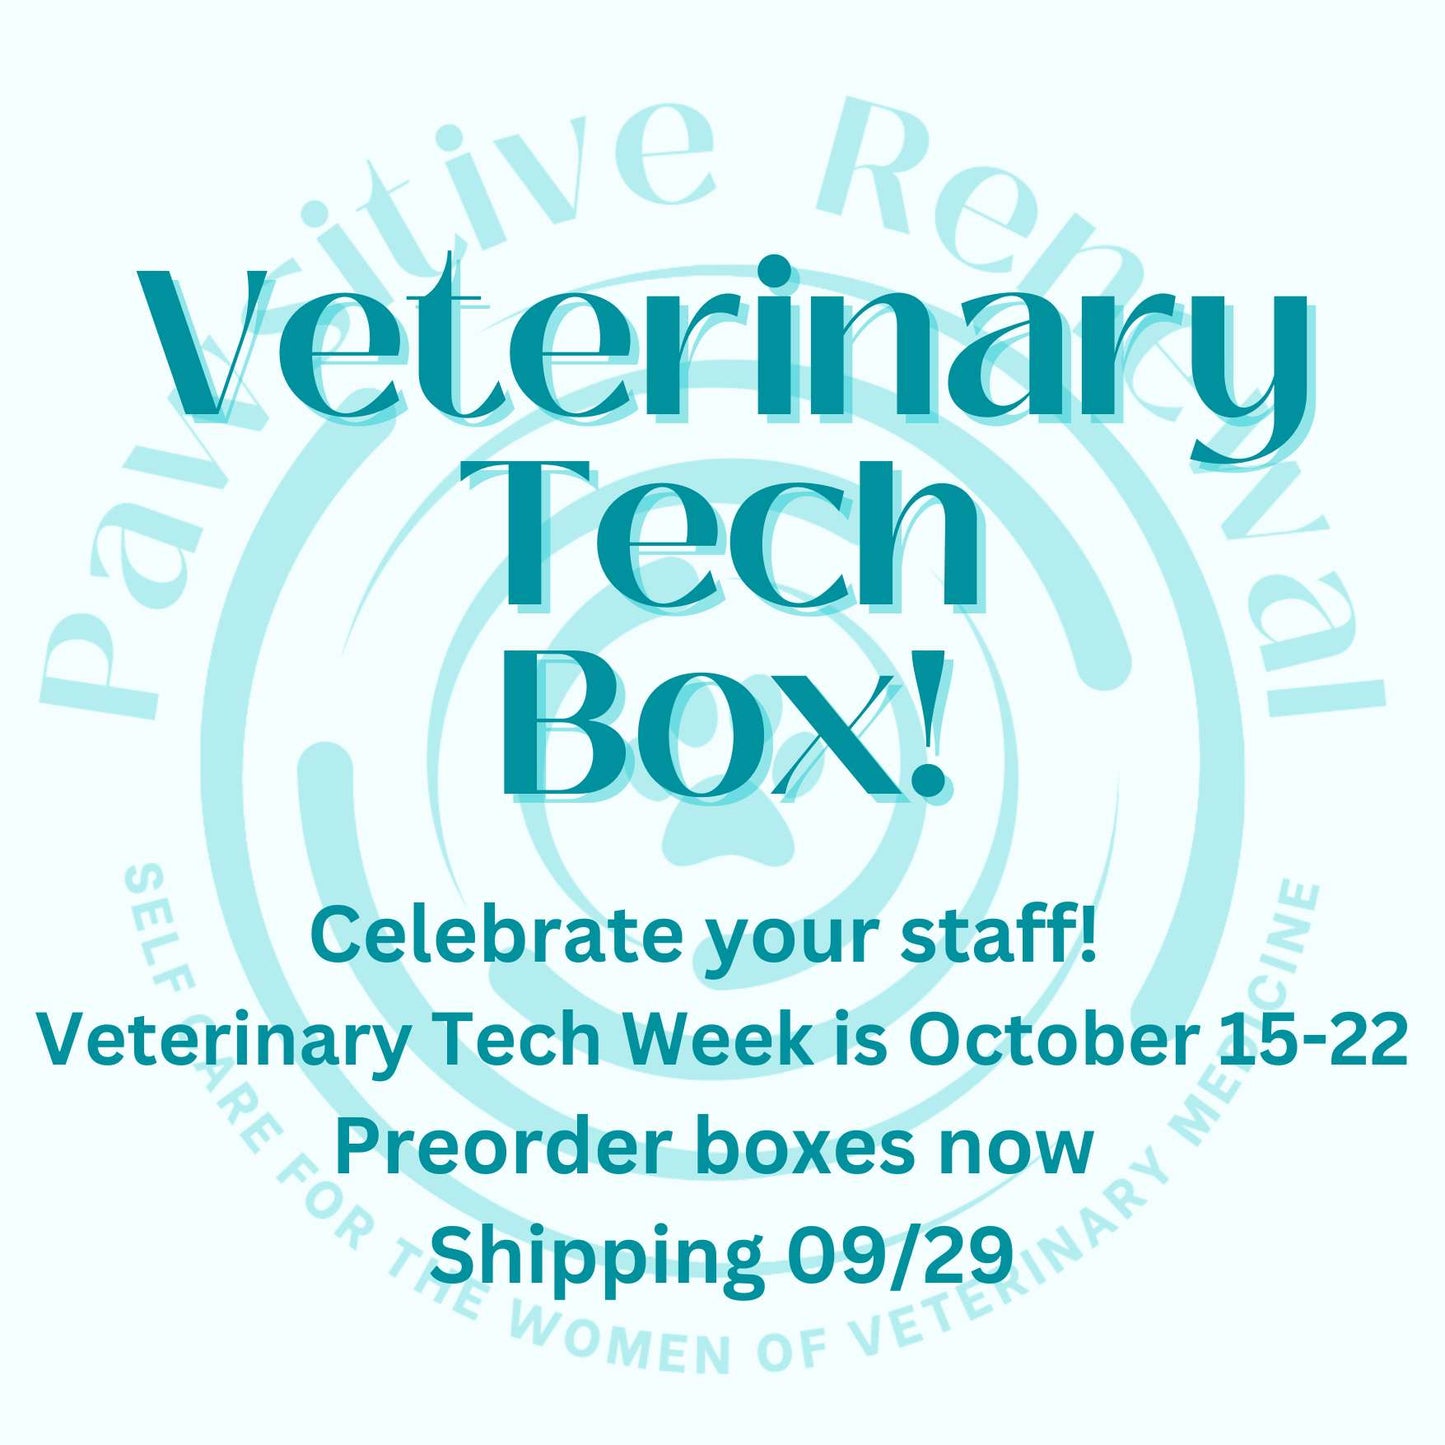 Veterinary Tech Pawsitive Renewal Box - T shirt size MEDIUM